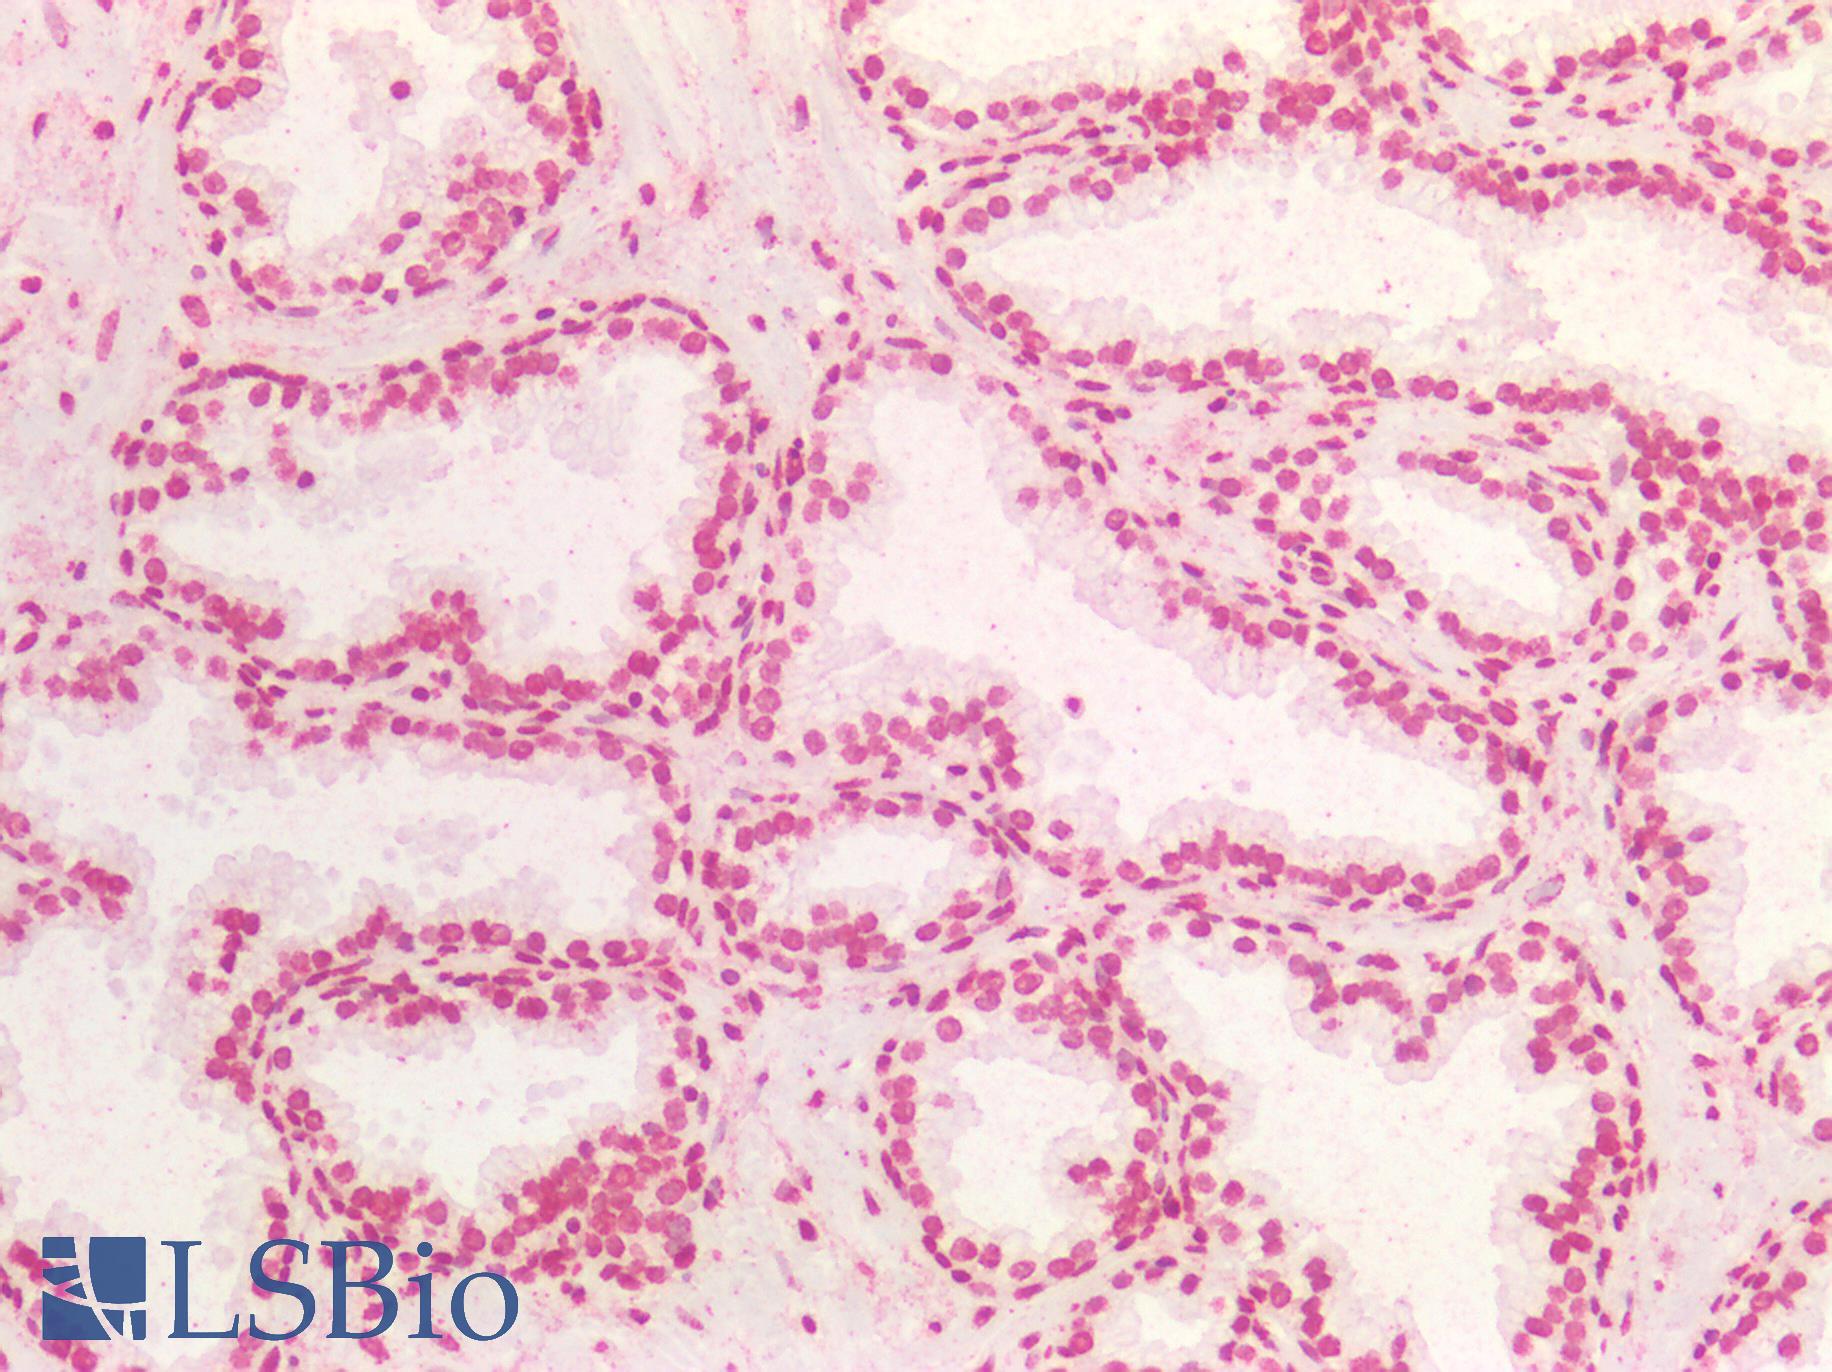 BRCA1 Antibody - Human Prostate: Formalin-Fixed, Paraffin-Embedded (FFPE)